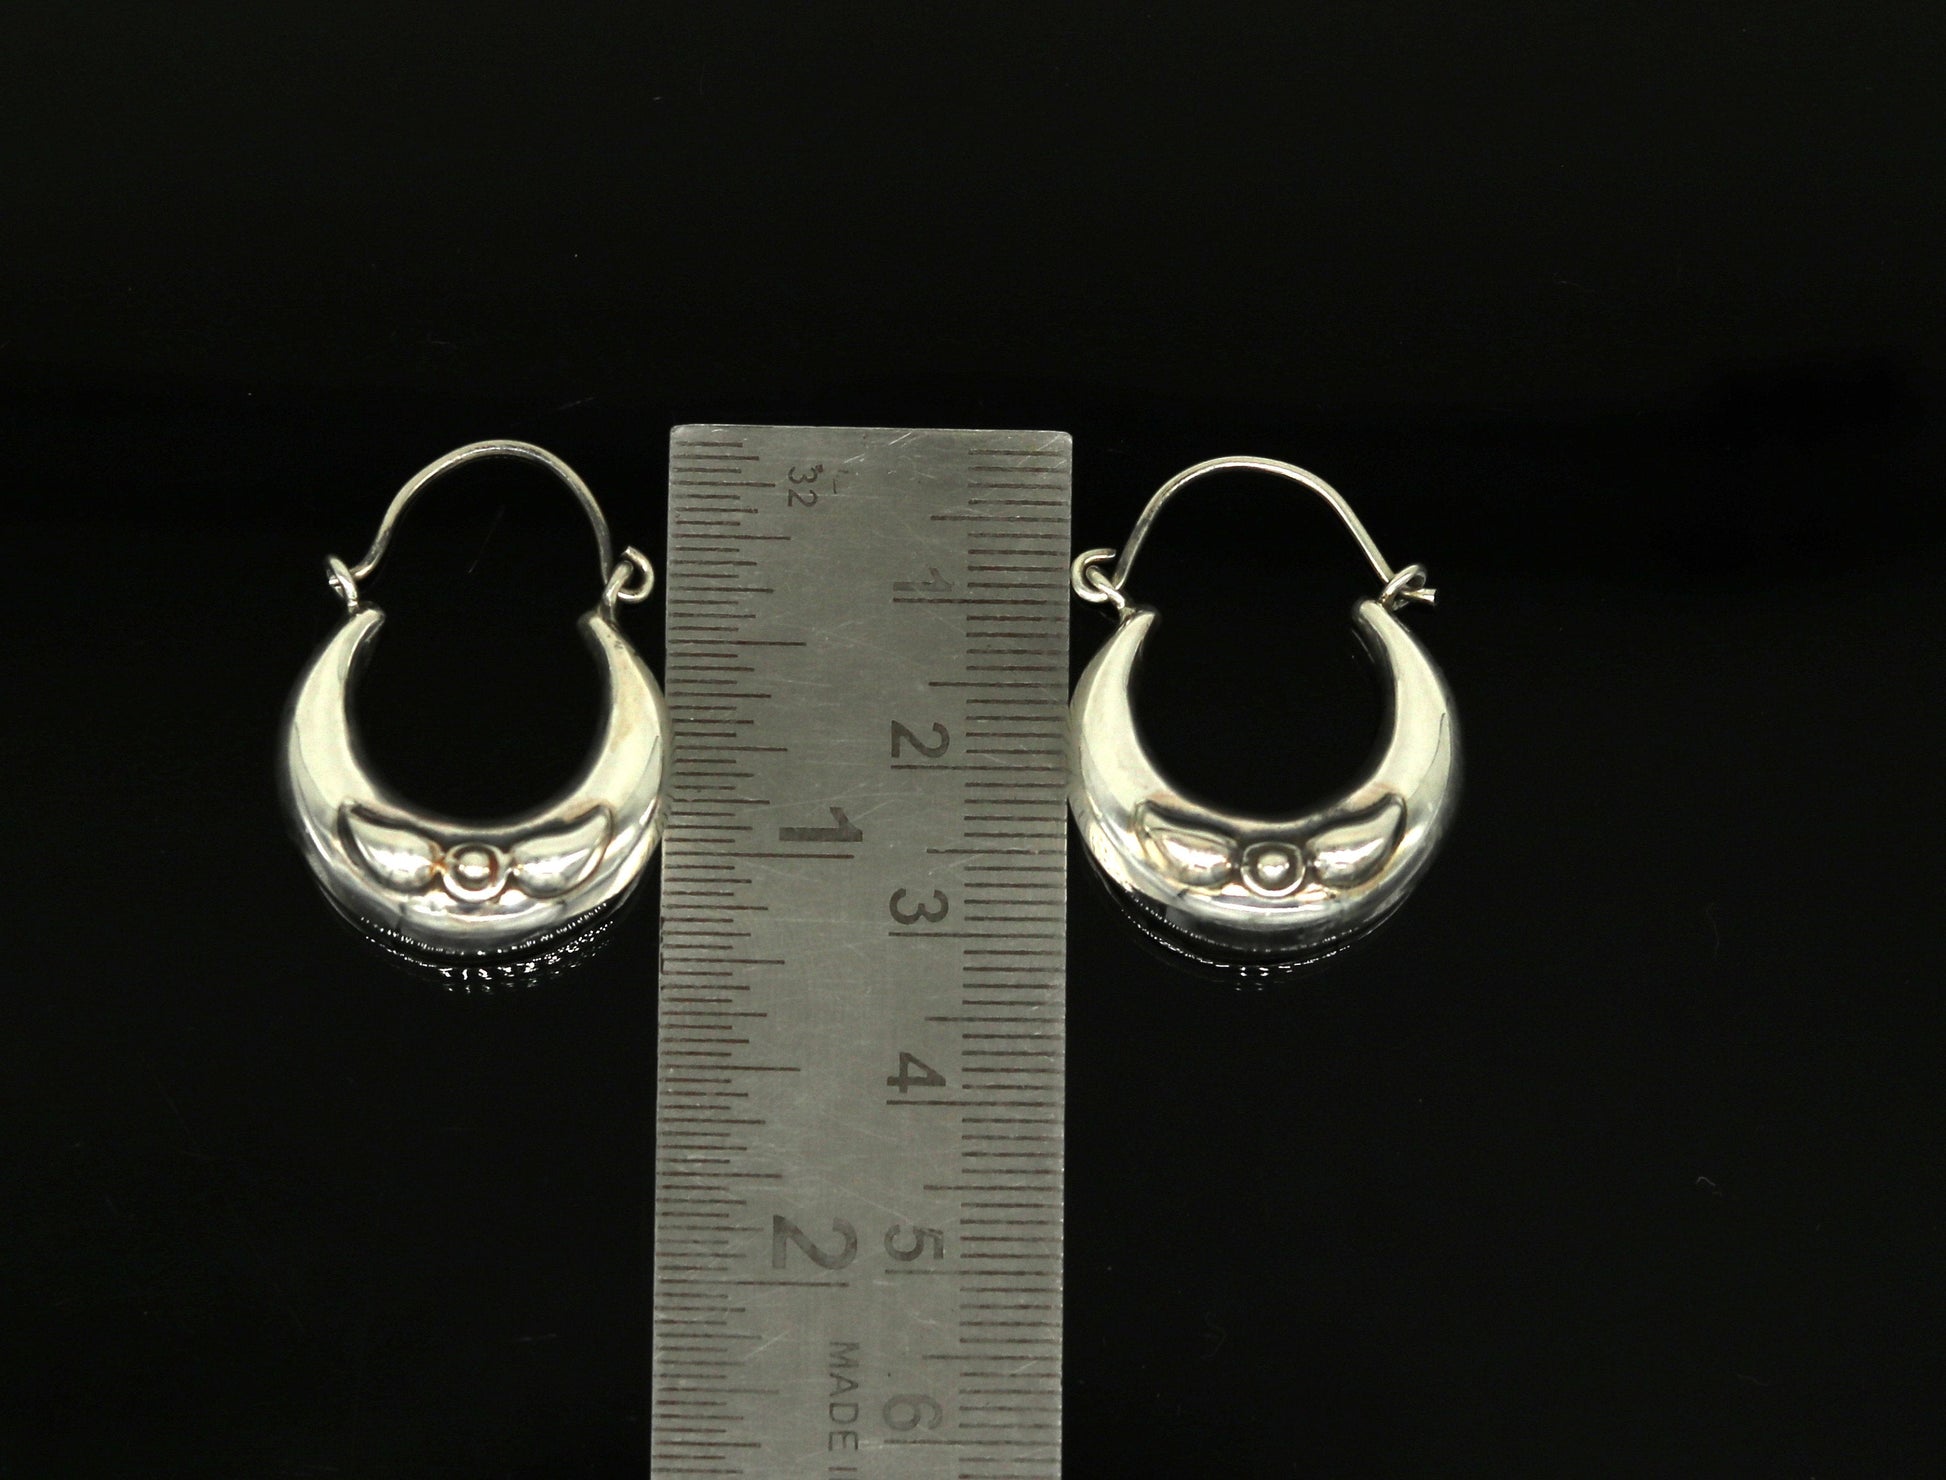 Handmade 925 sterling silver jewelry, fabulous vintage stylish customized hoops earrings bali tribal ethnic personalized jewelry ske17 - TRIBAL ORNAMENTS